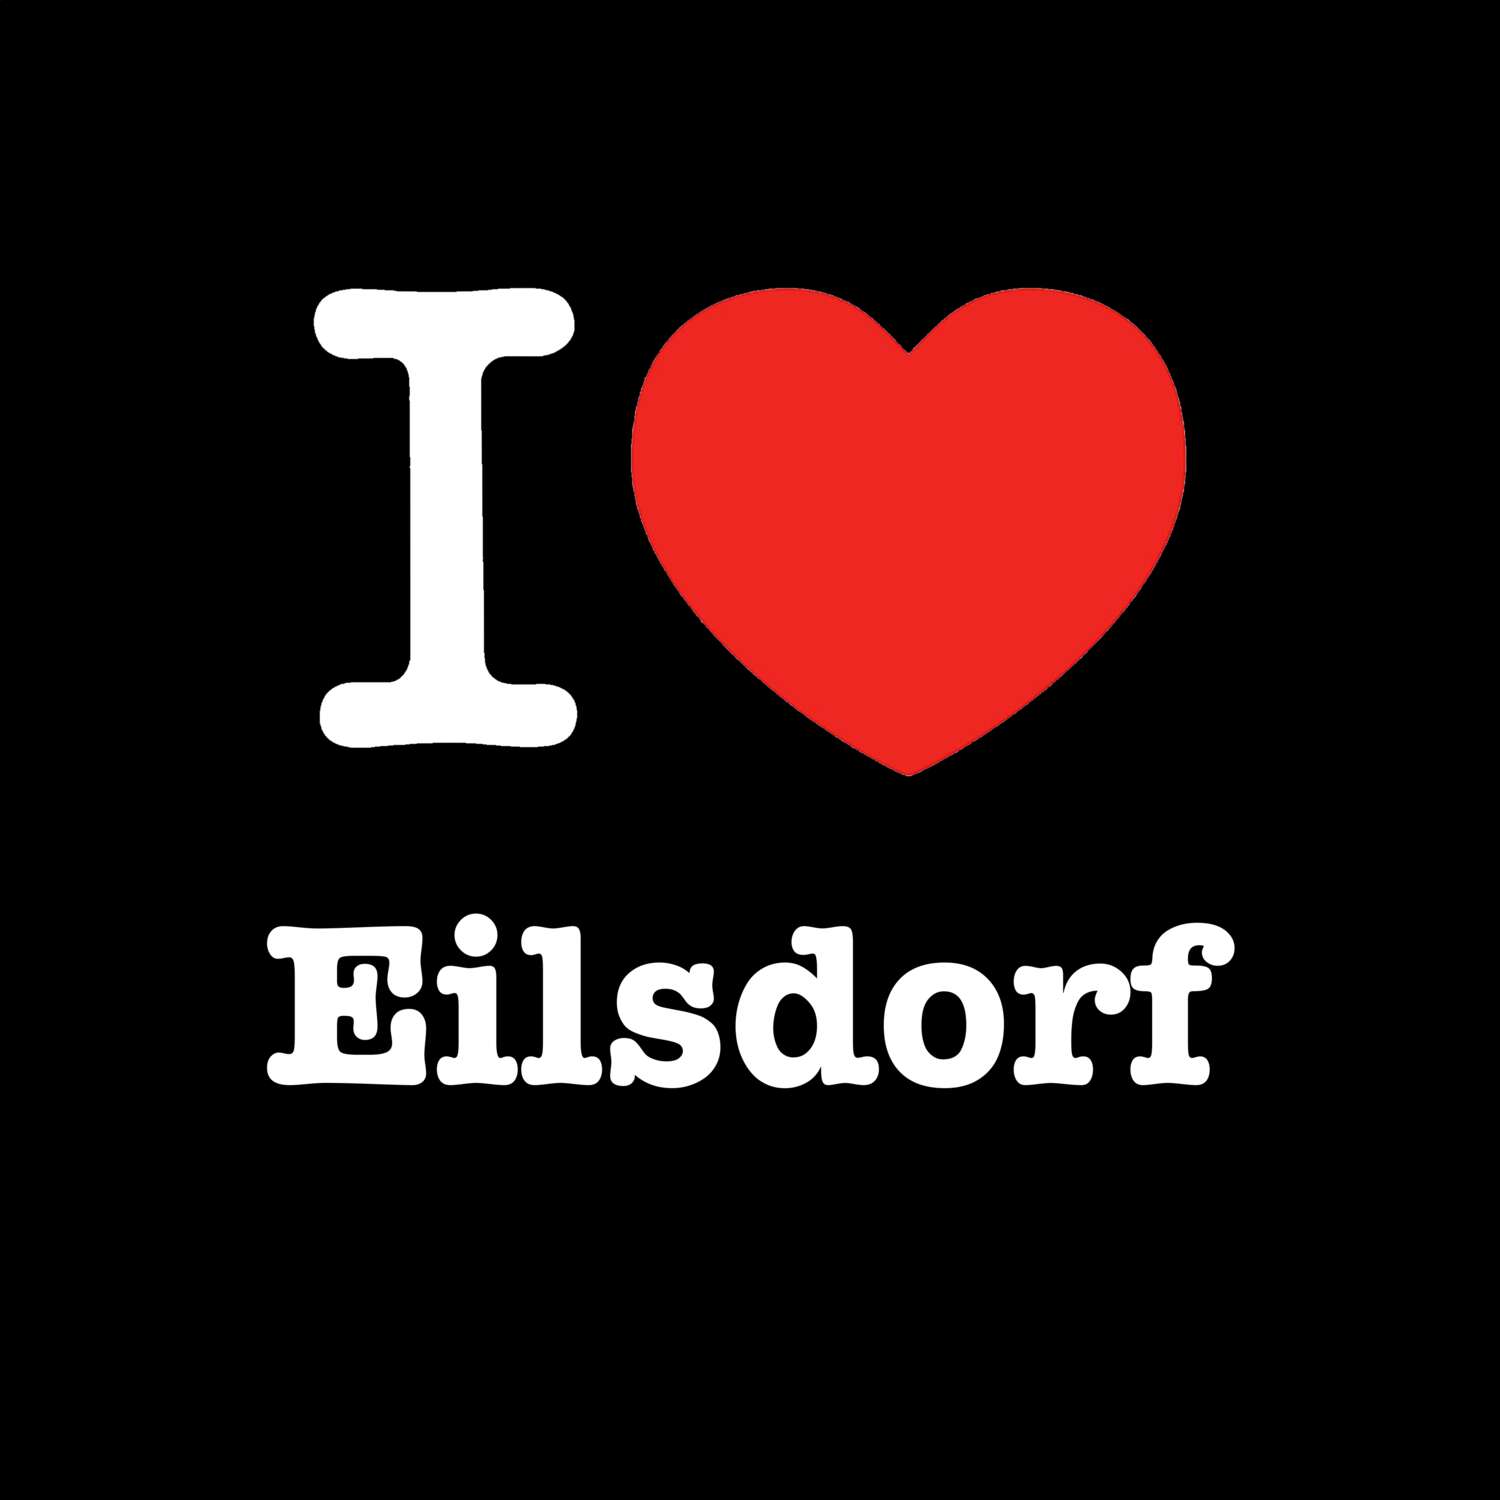 Eilsdorf T-Shirt »I love«